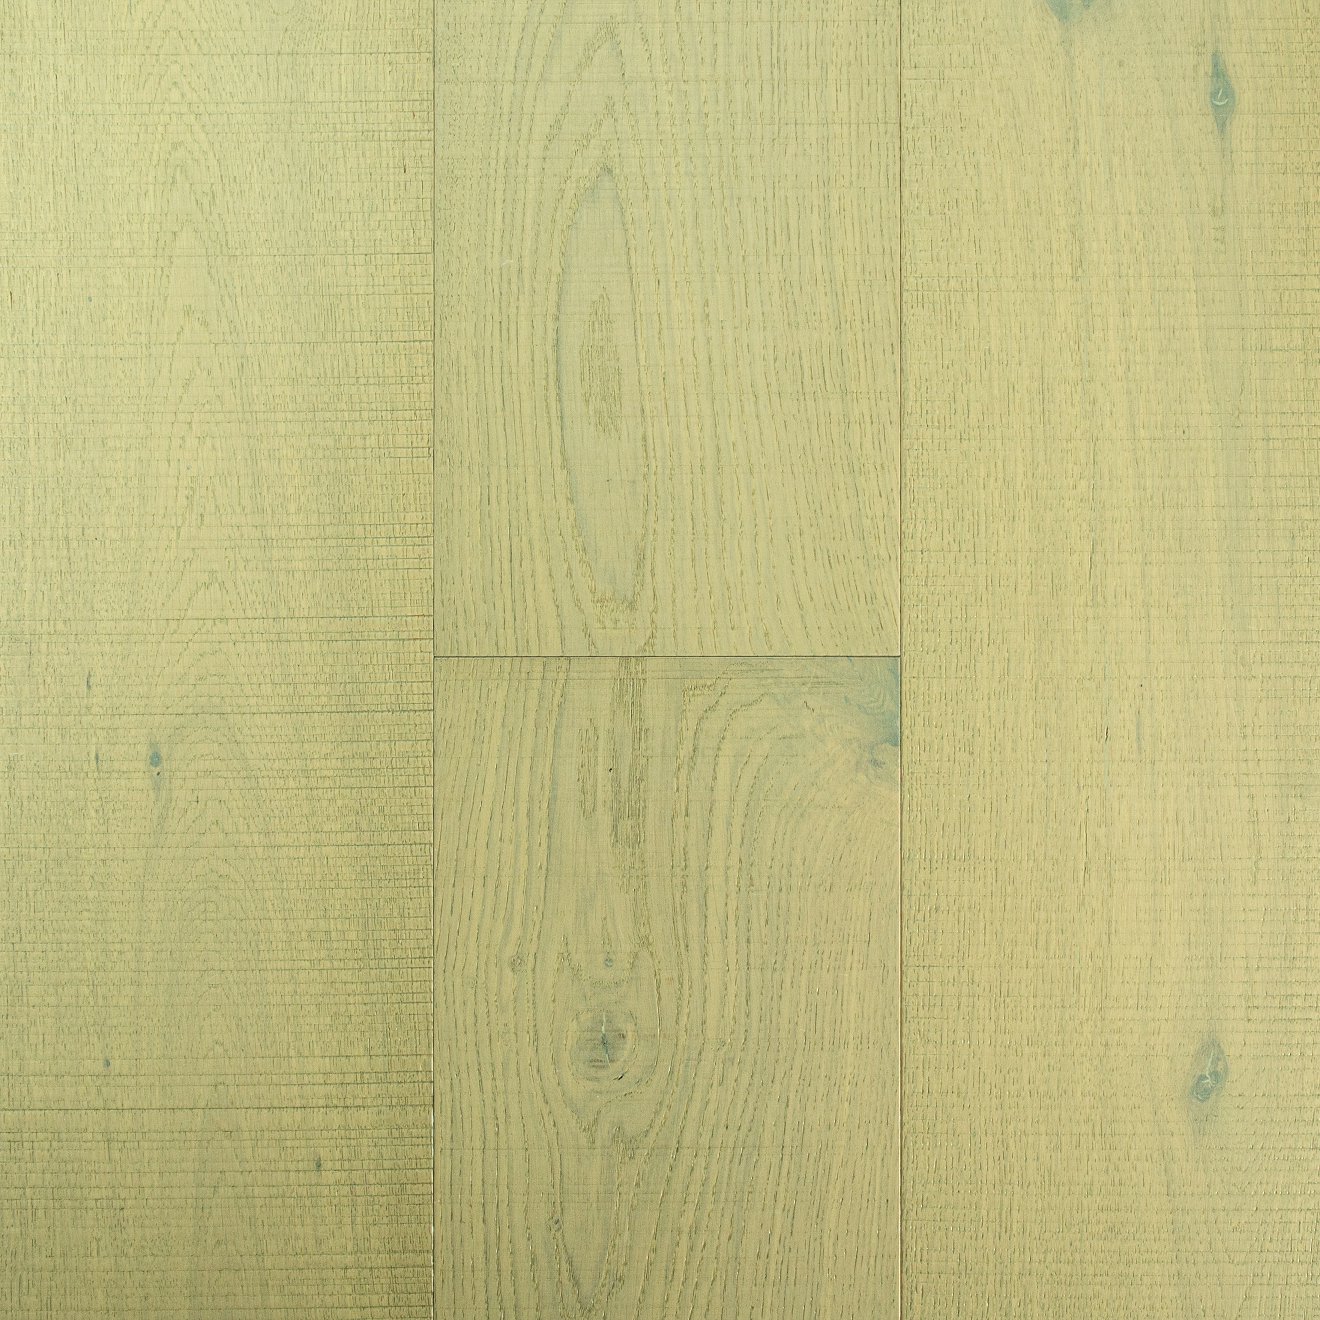 2020 High quality Hardwood Flooring Specialists -
 Modern style wood veneer SPC core SPC flooring – Kangton